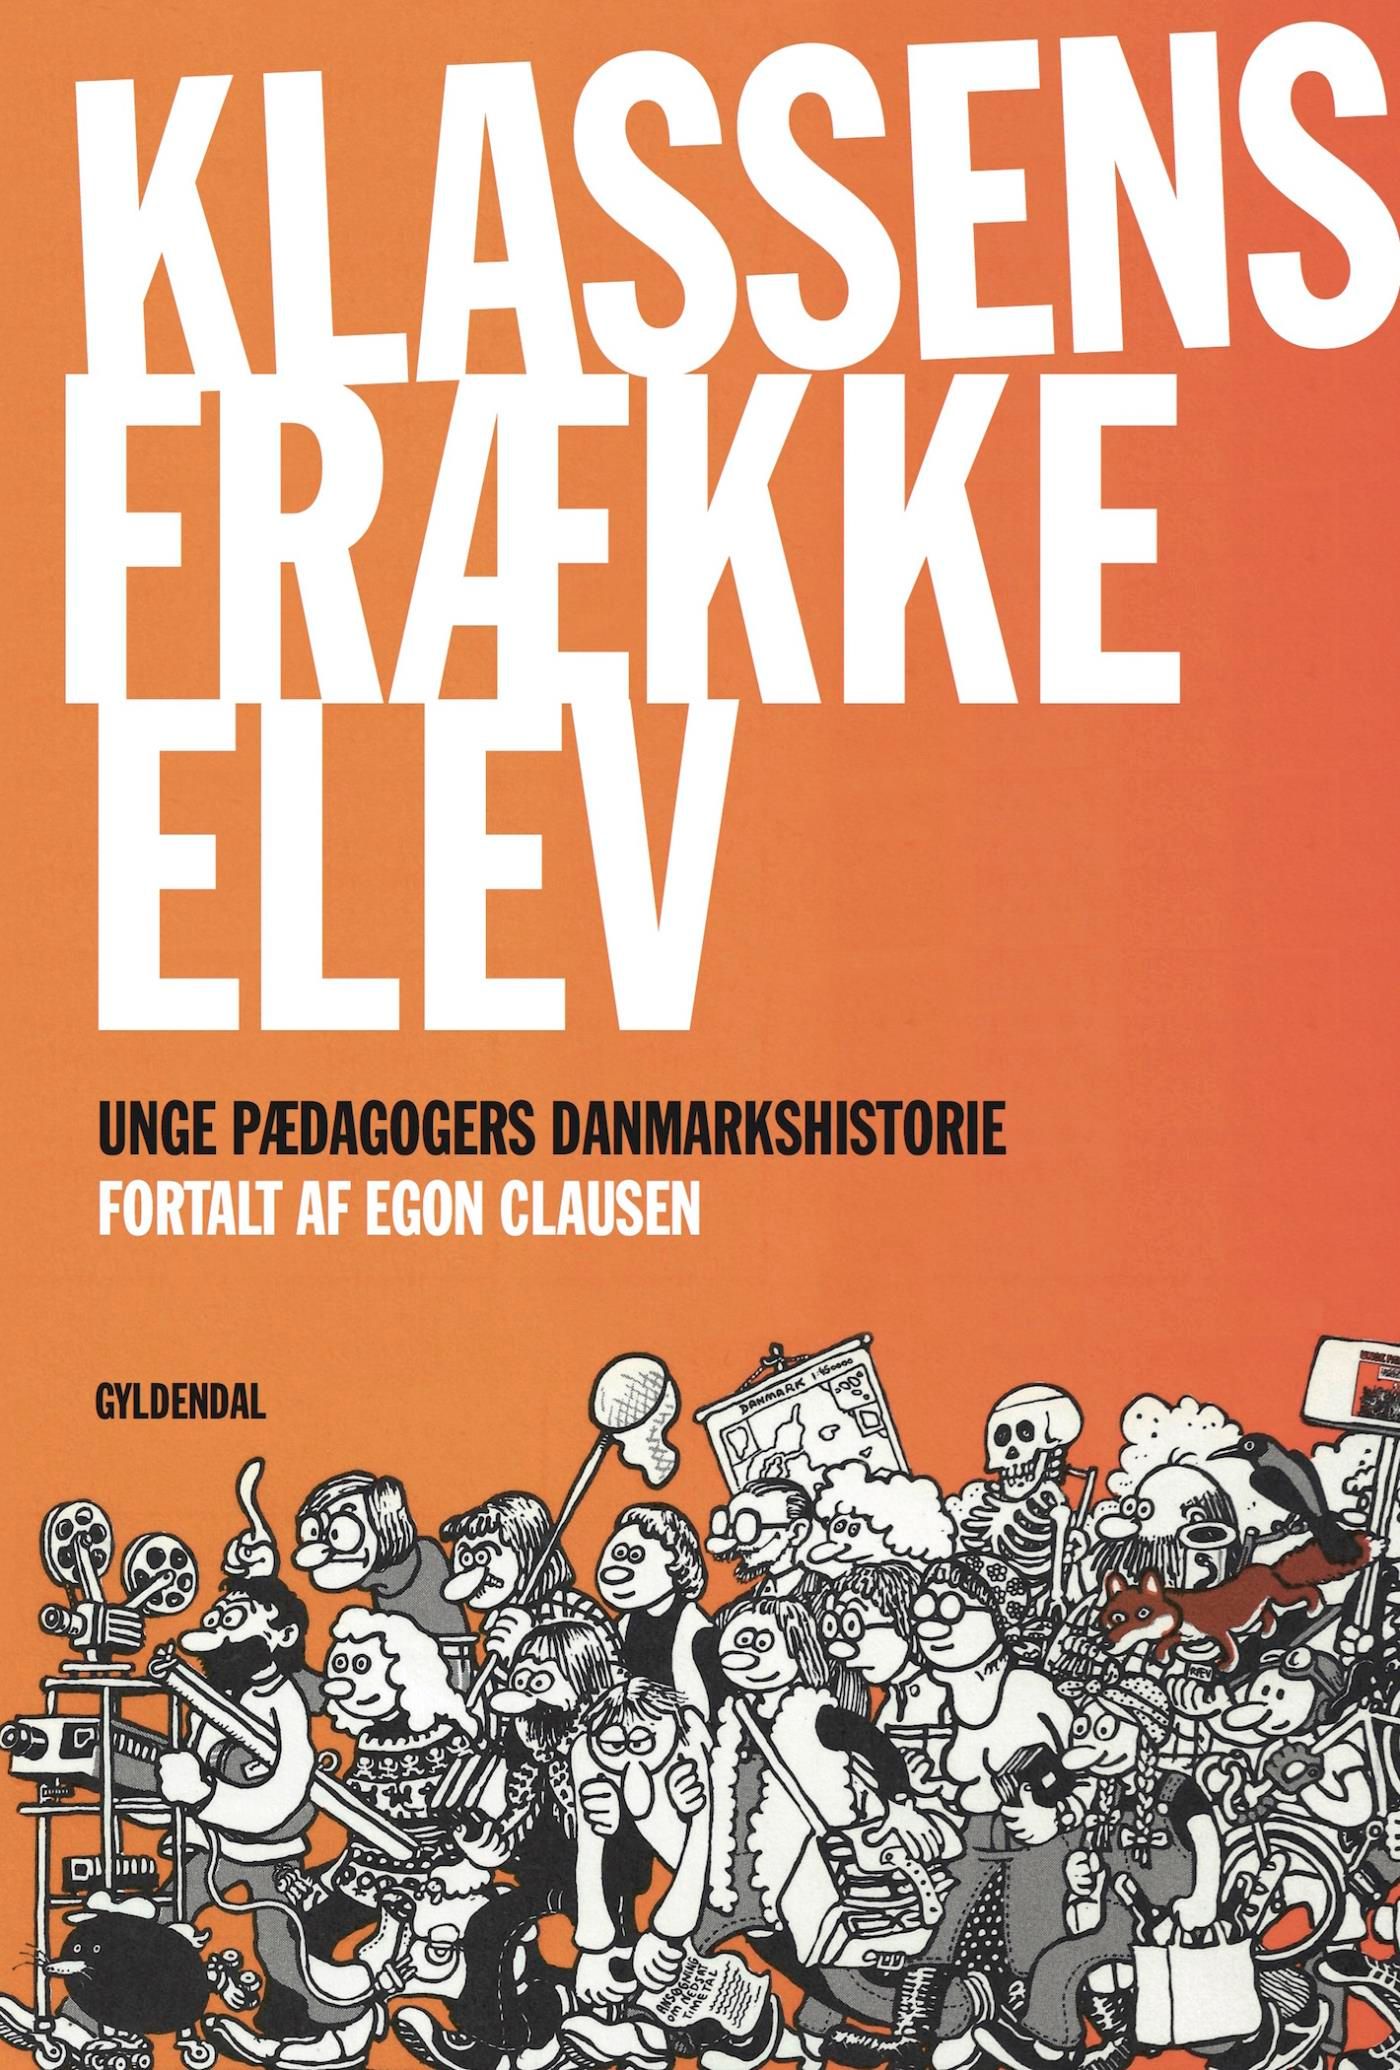 Klassens frække elev, e-bok av Egon Clausen